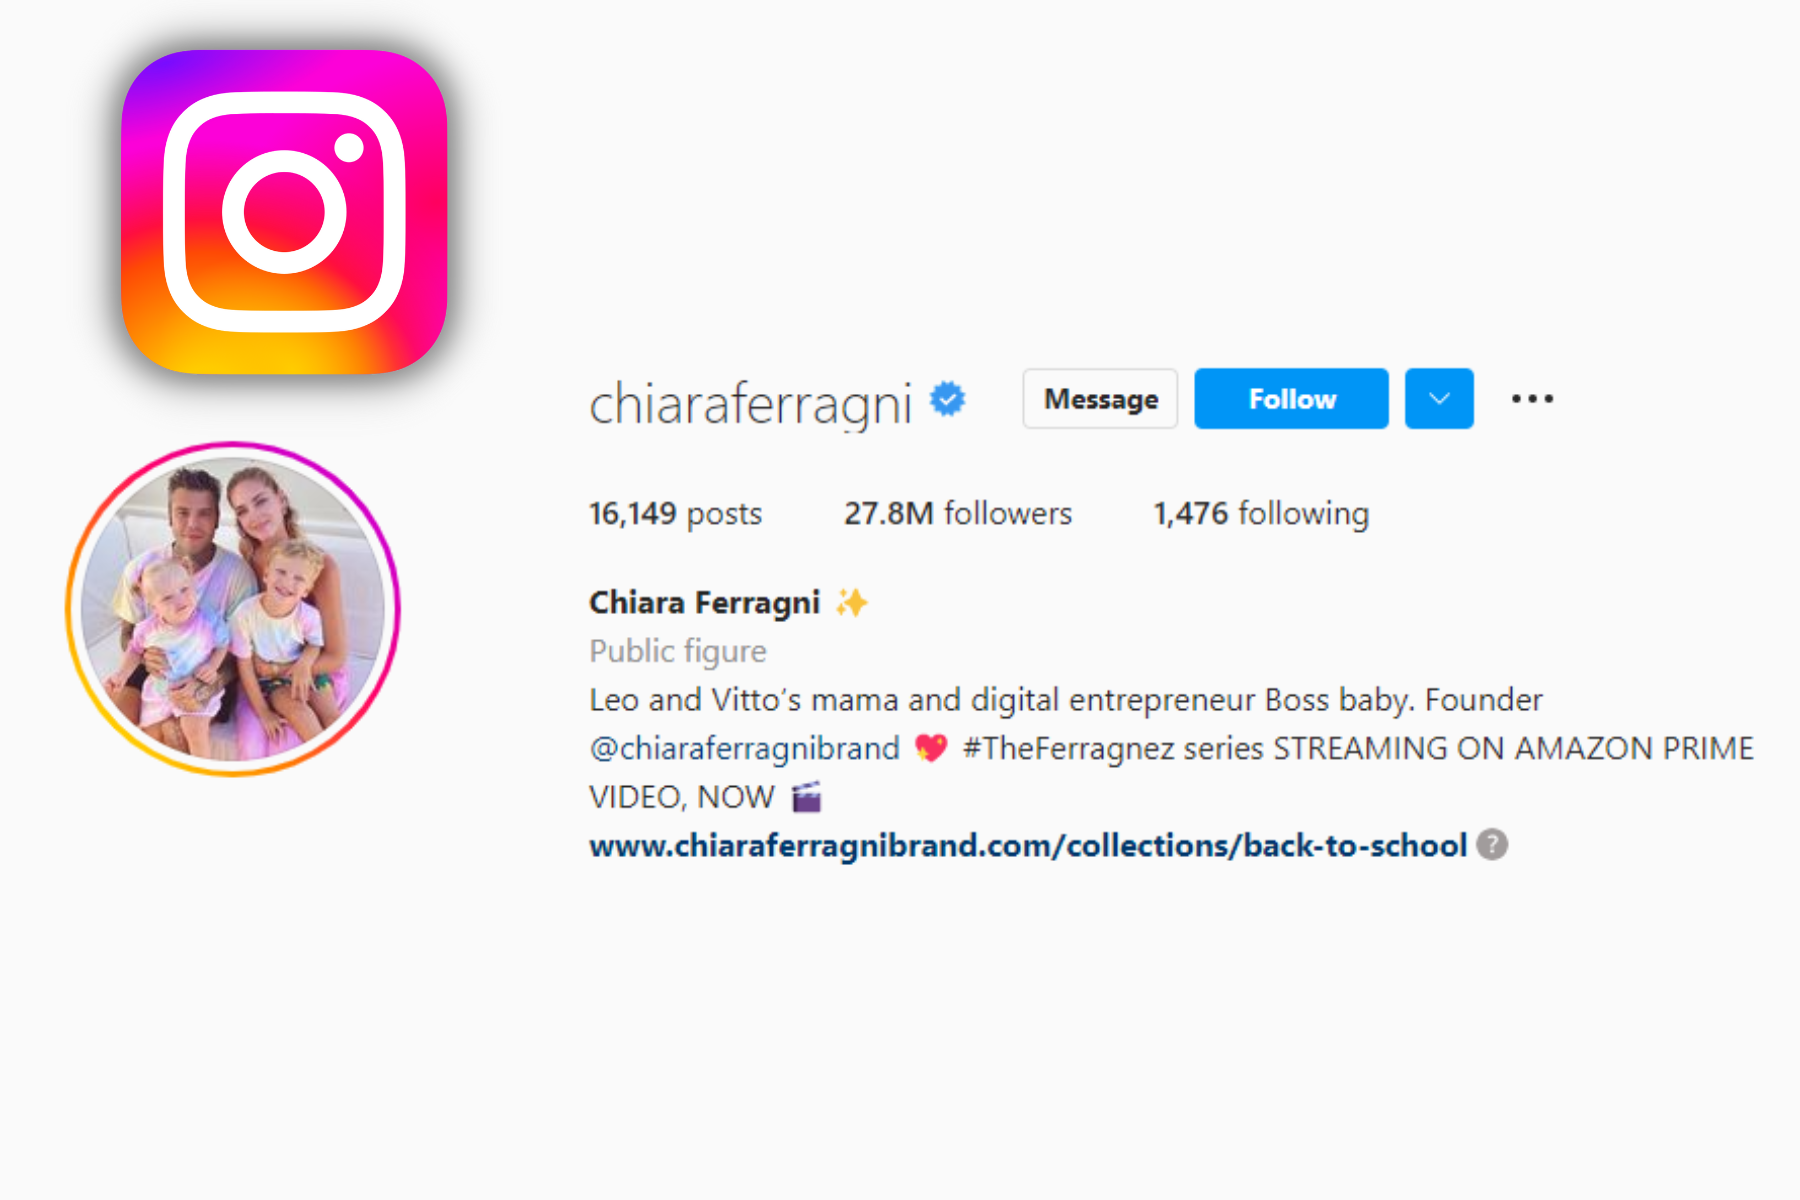 Chiara Ferragni's Instagram account with 27.8 million followers